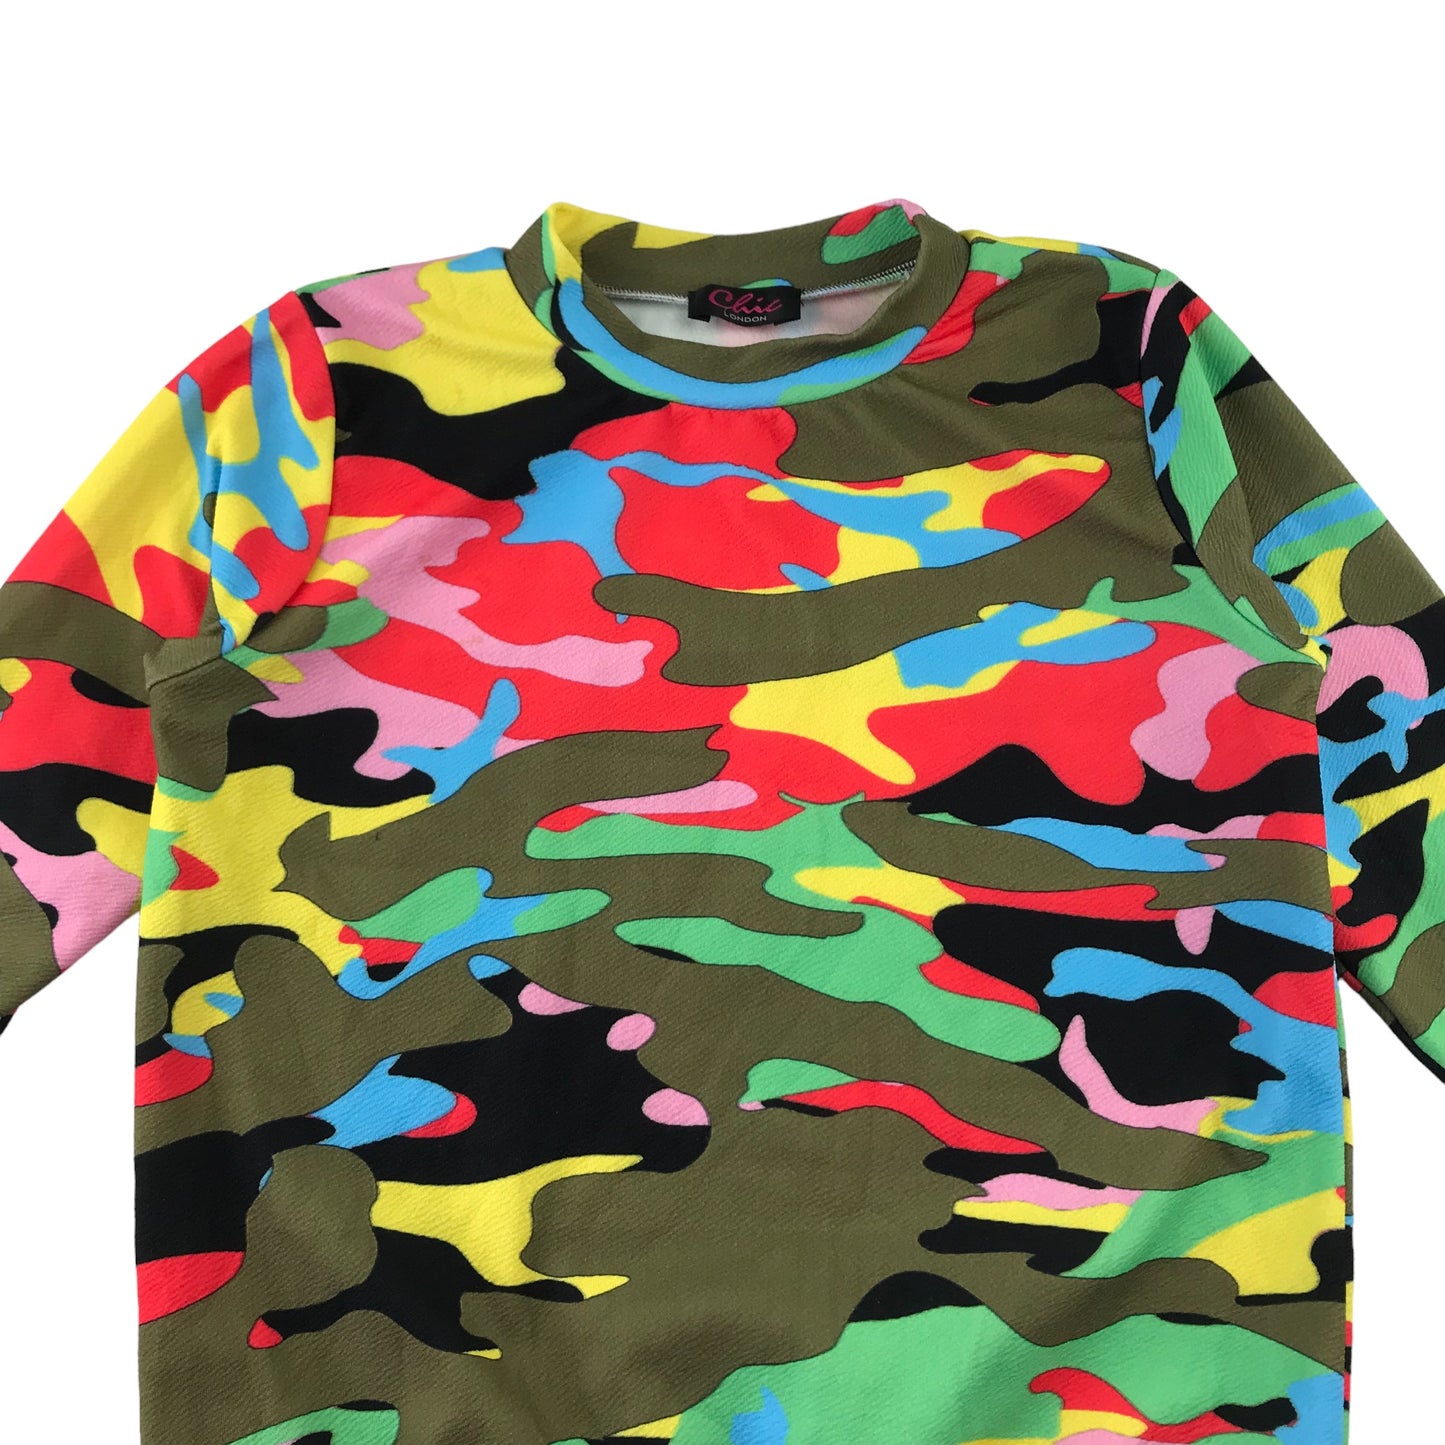 Chic London T-shirt jumper 11-12 years multicolour camo pattern light jumper